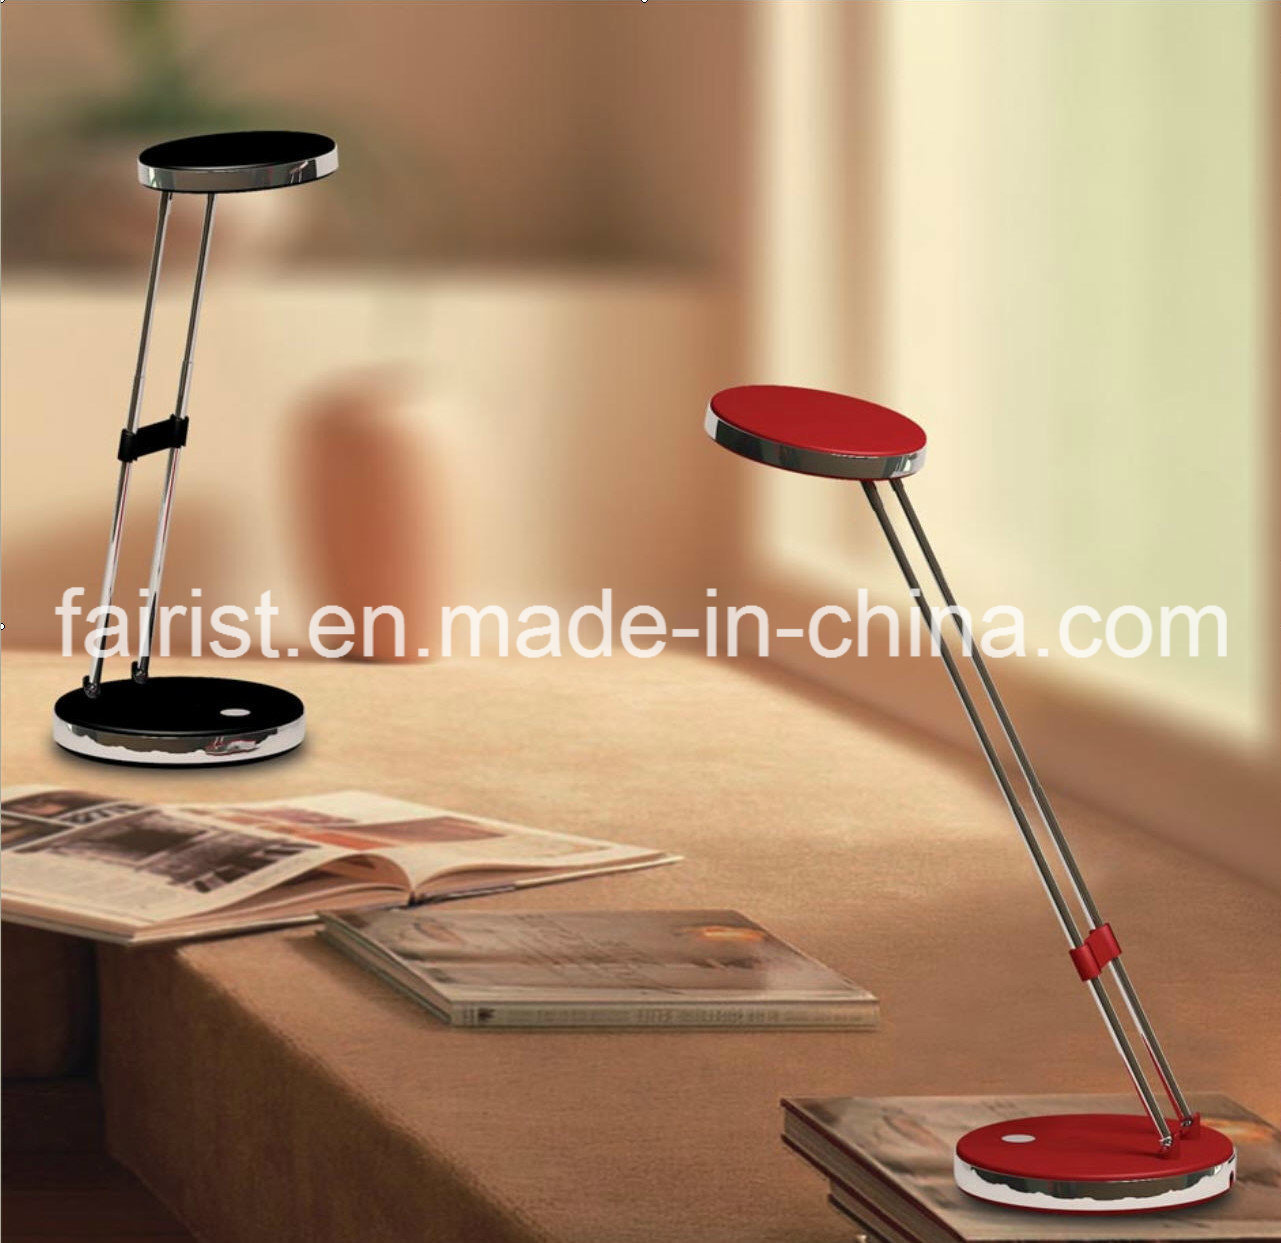 Newest Mini LED Table Lamp with USB